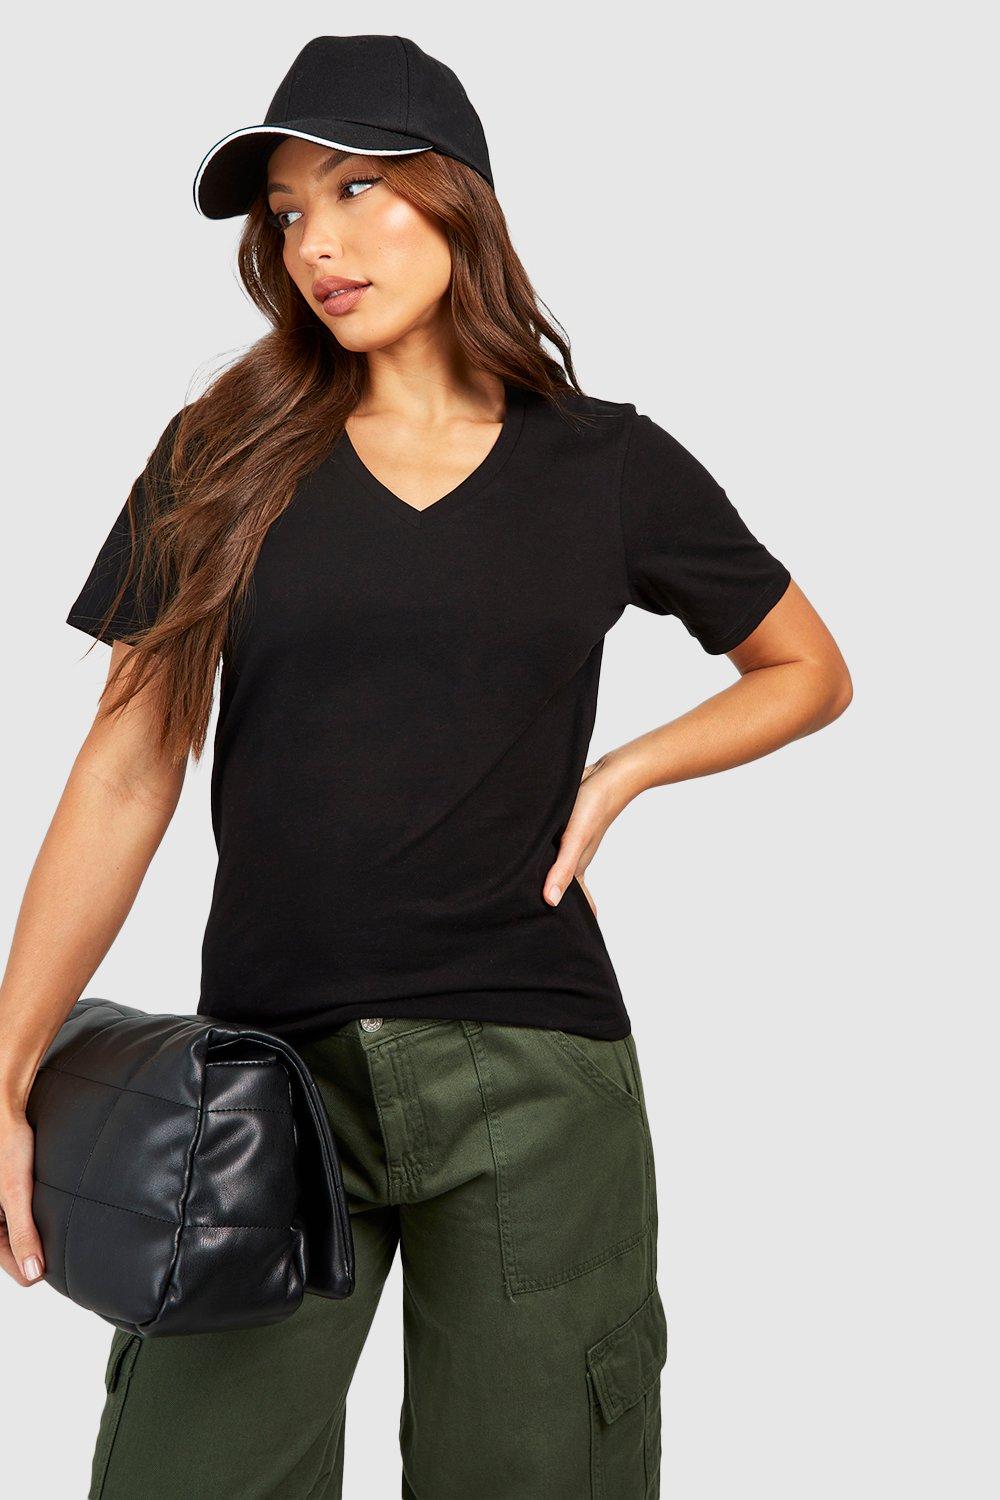 Cheap Women Summer Fashion T-Shirt V-Neck Short Sleeve Base Shirt Crop Top